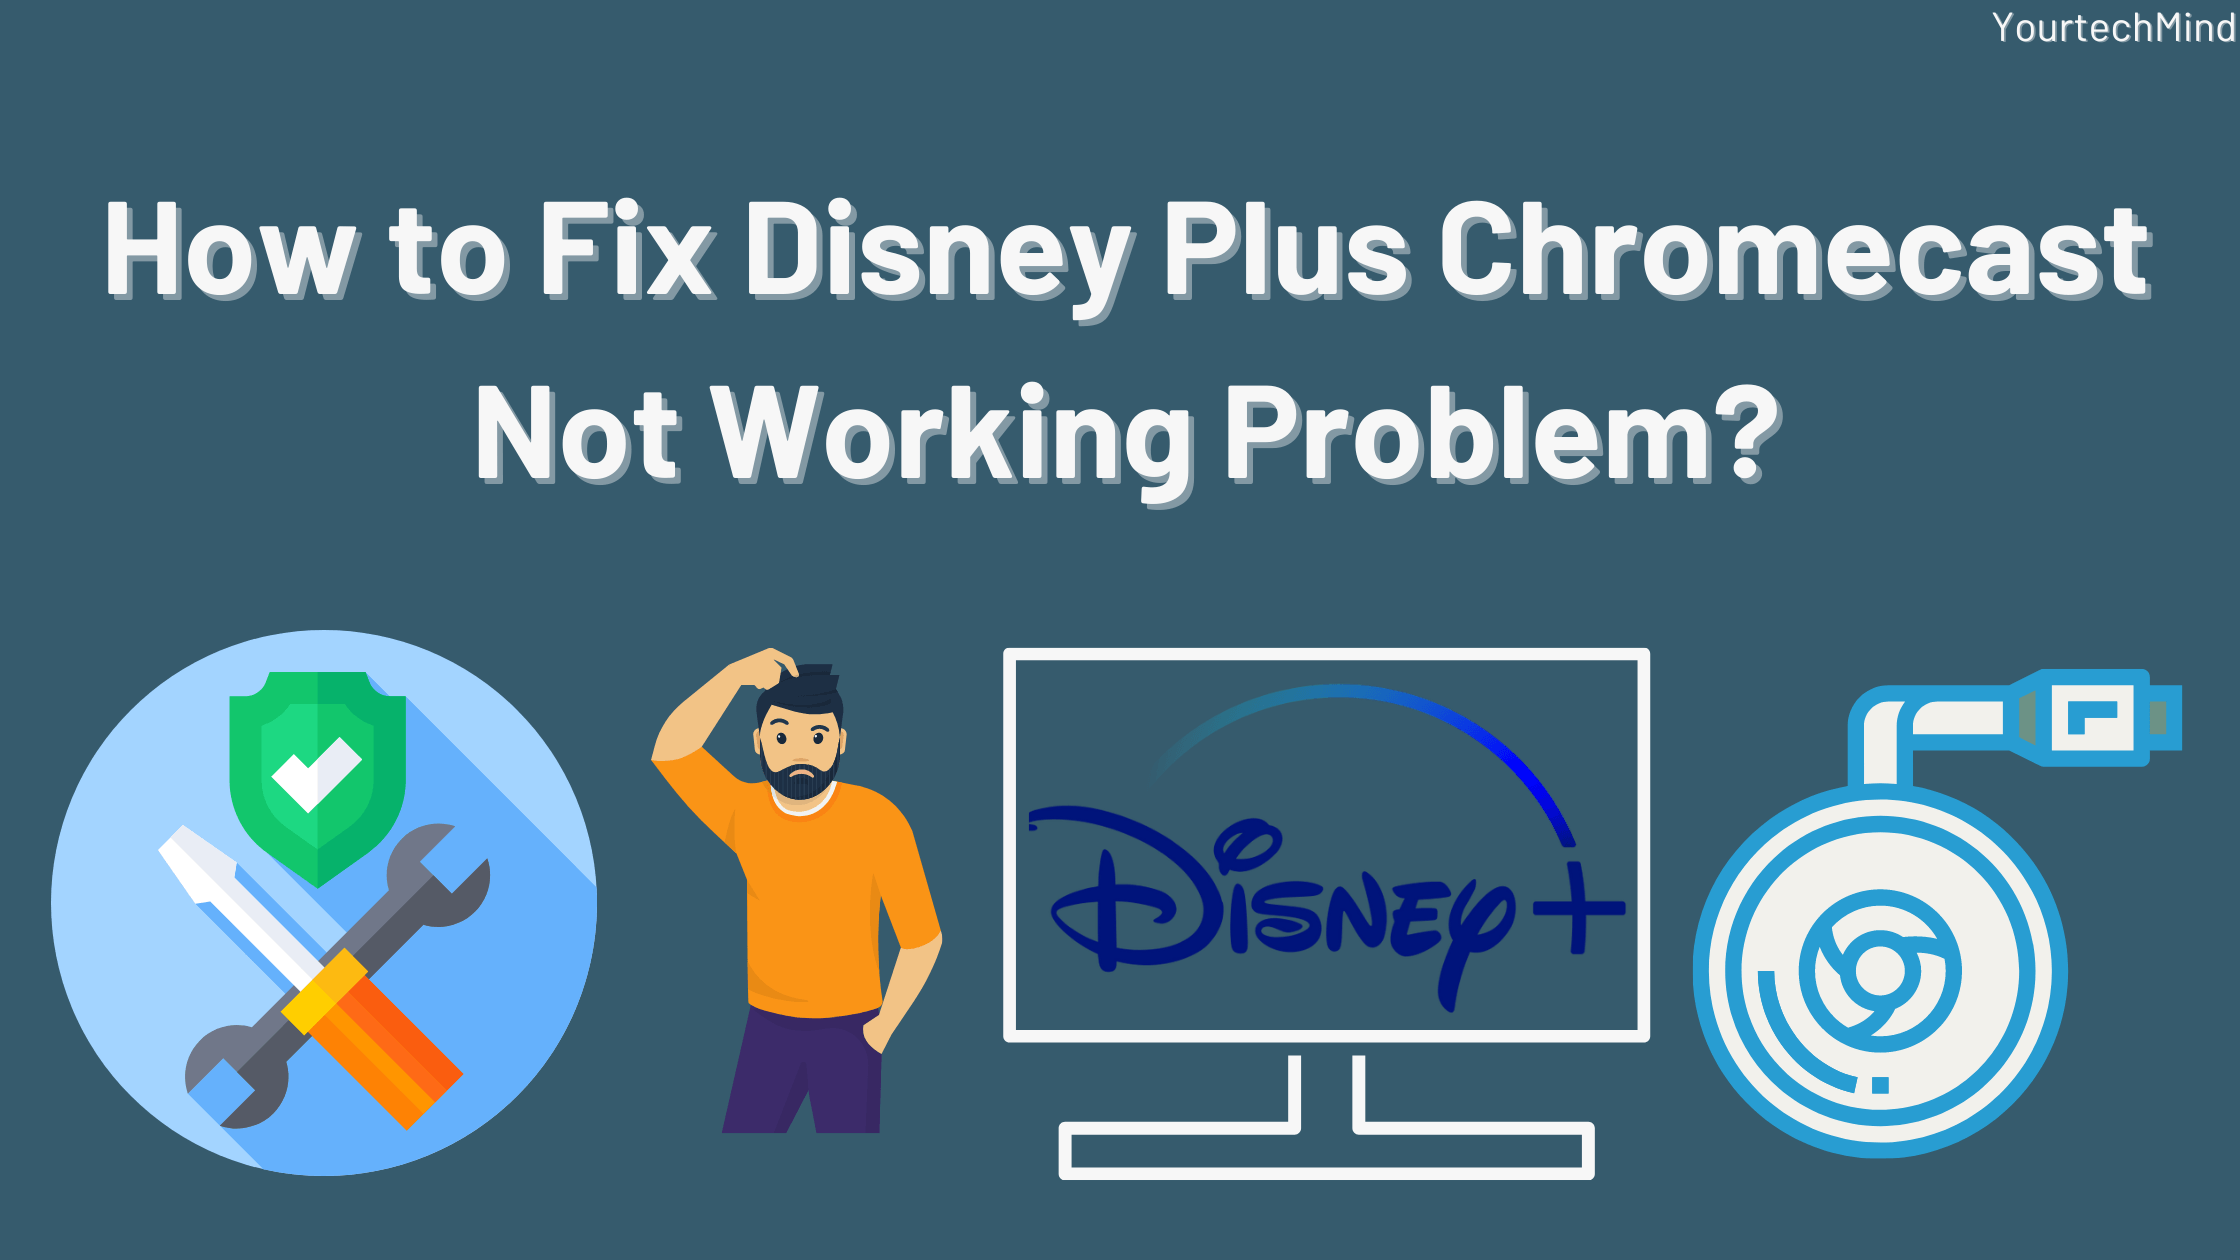 Disney Plus Chromecast Not Working